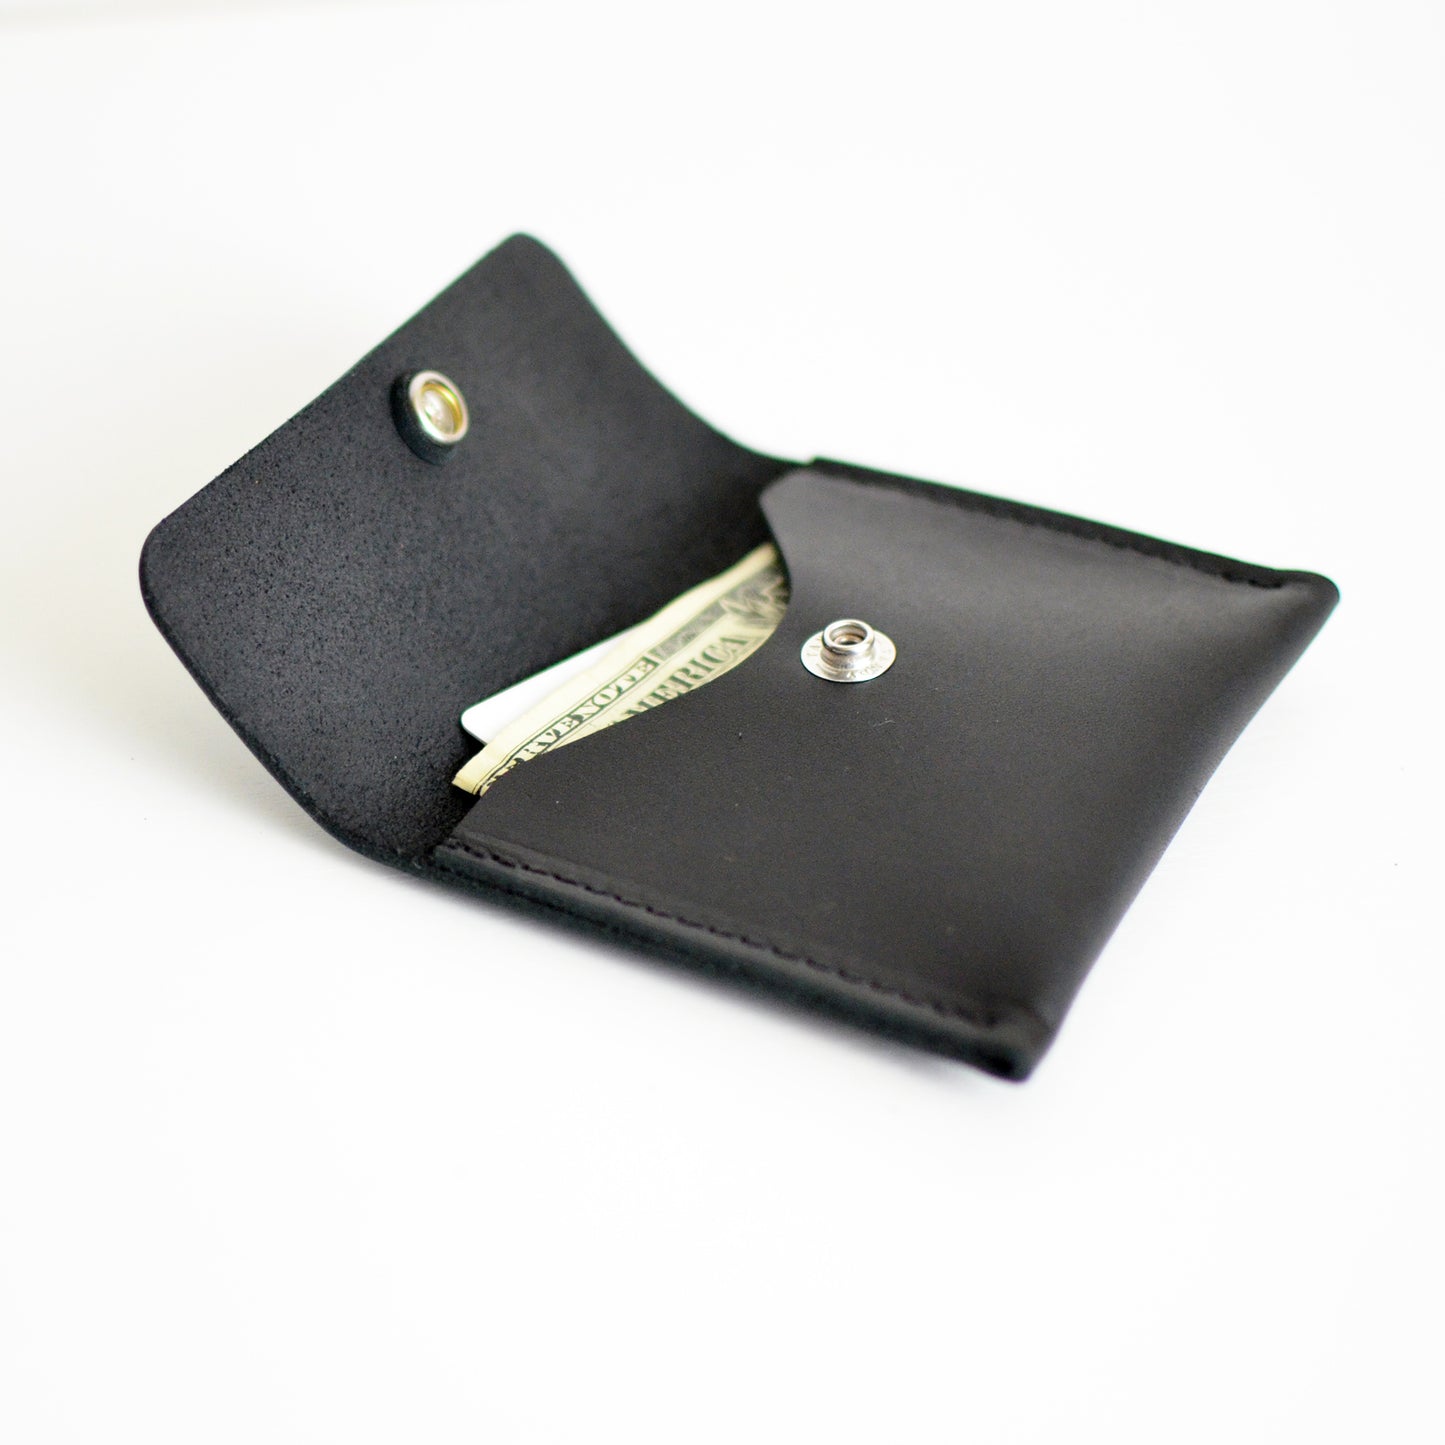 Mini Wallet - Honey Leather